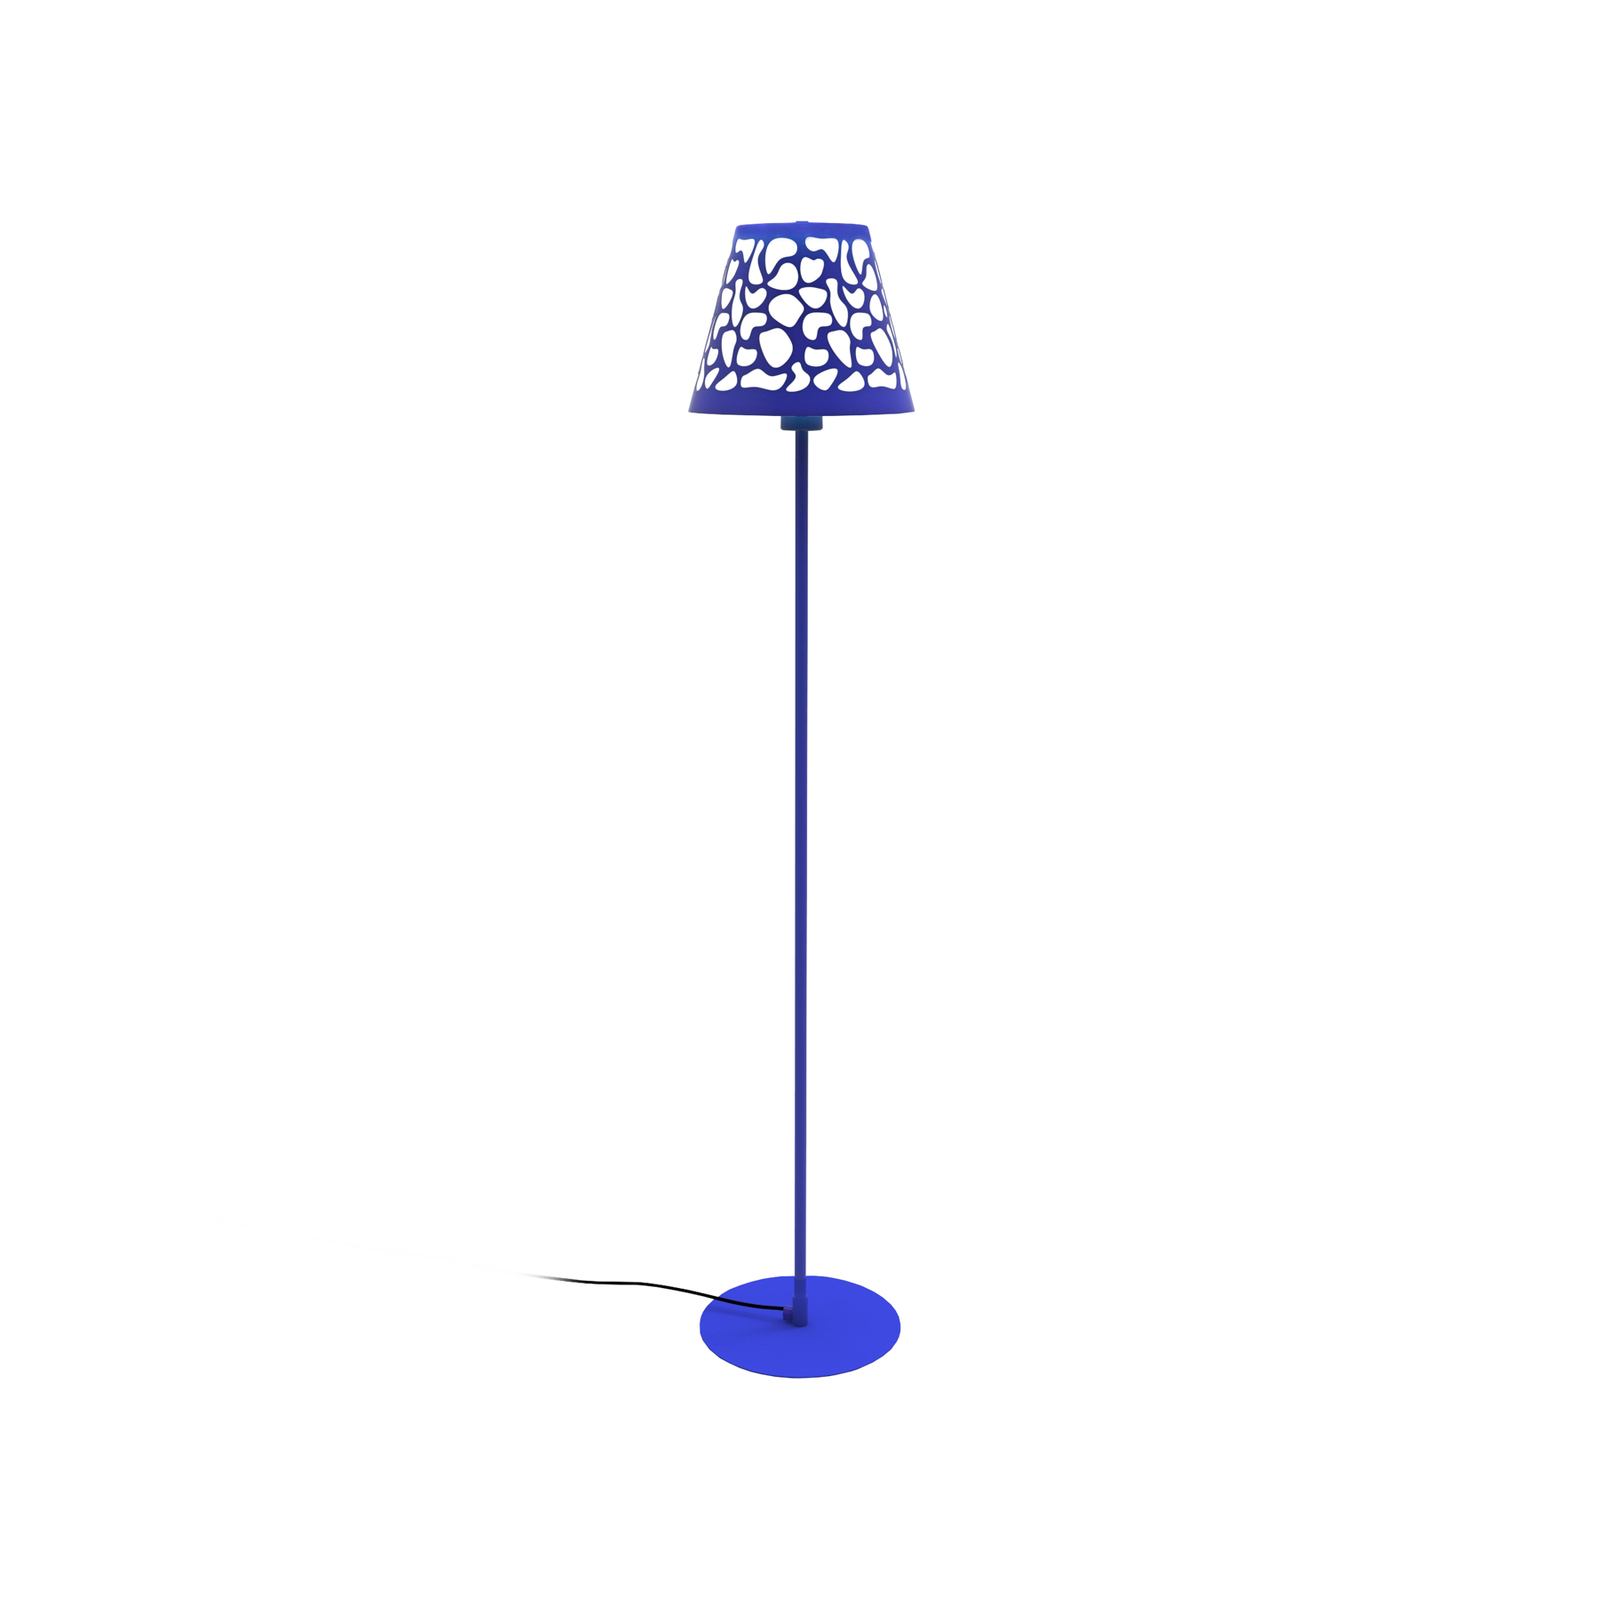 Aluminor Nihoa Stehlampe mit Lochmuster, blau/weiß